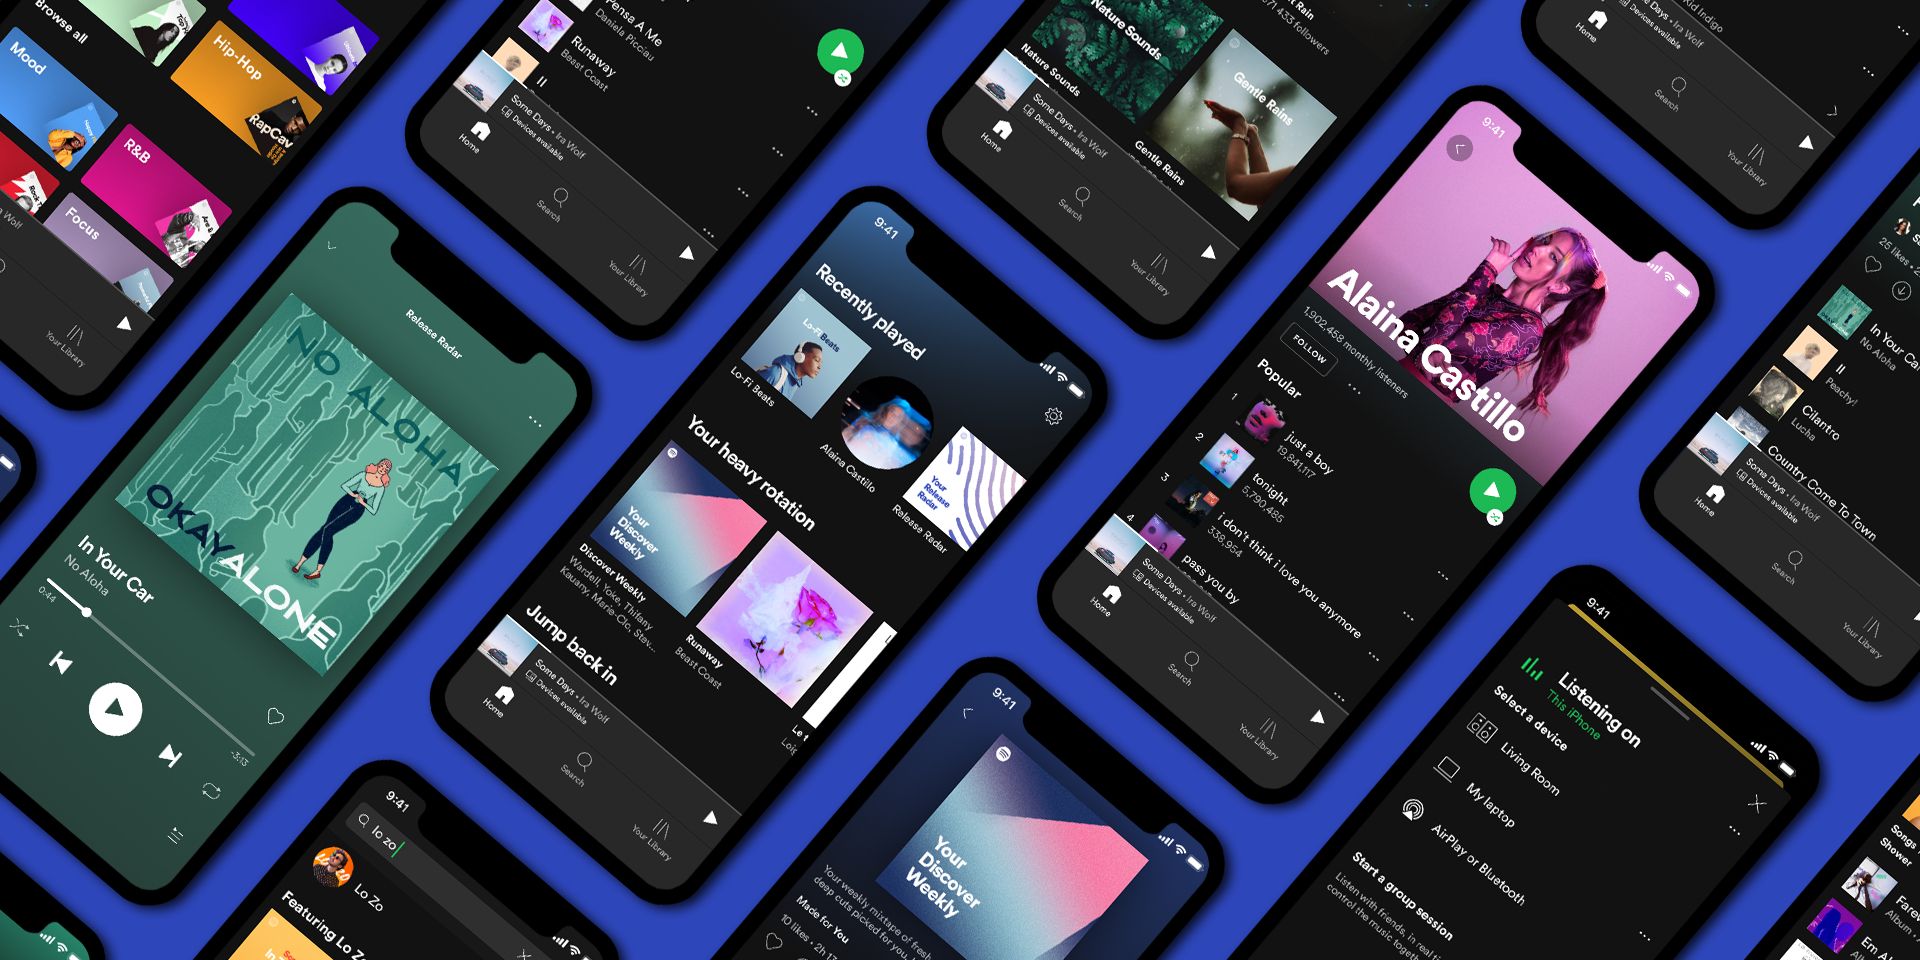 Pattern of Spotify screenshots on phones